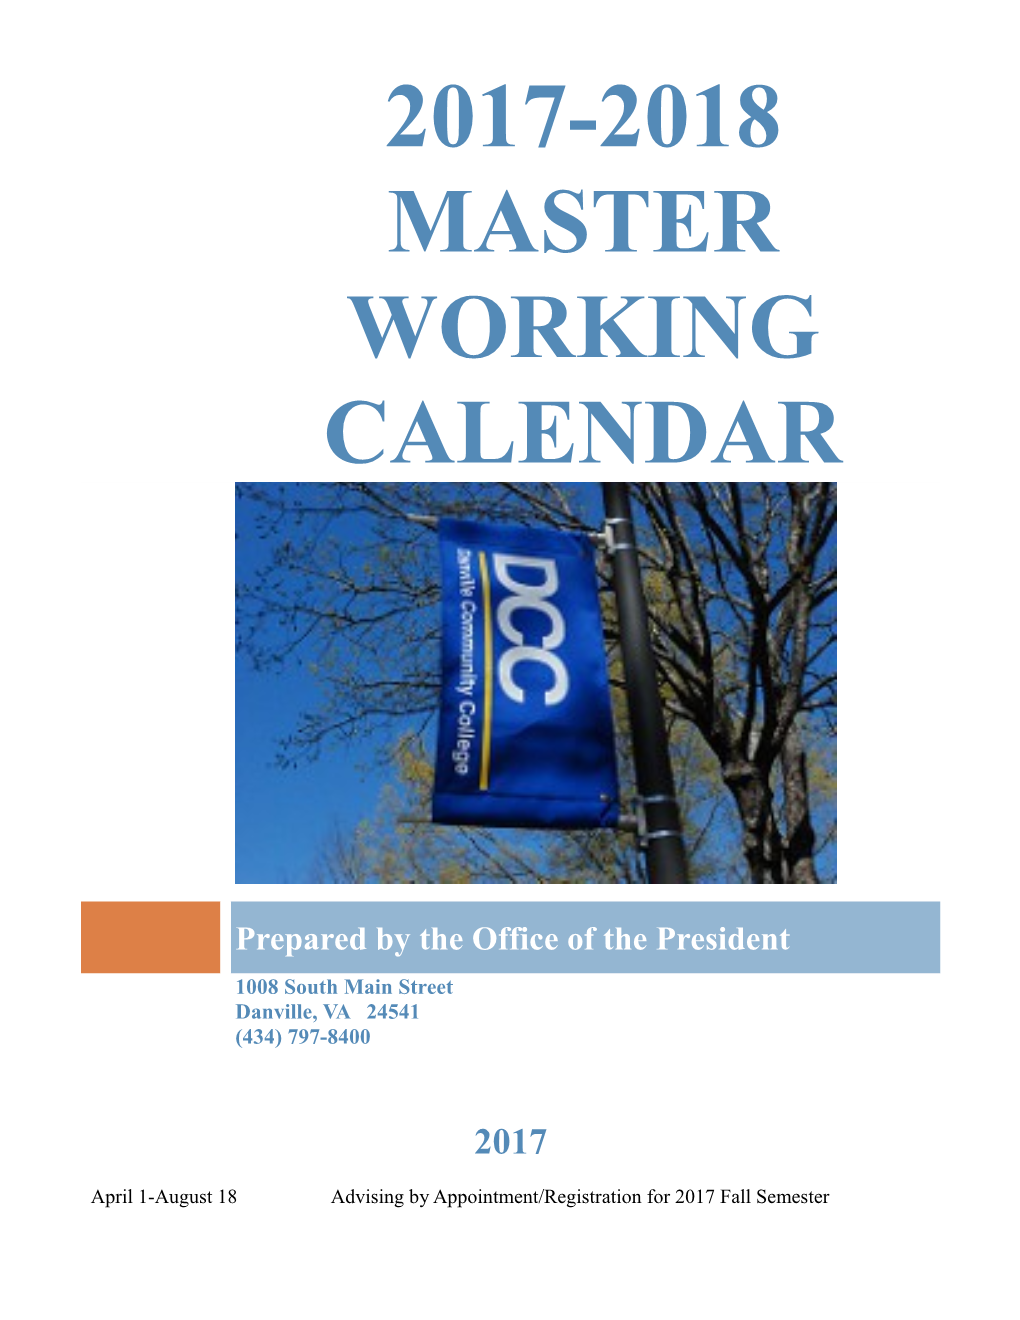 2017-2018 Master Working Calendar